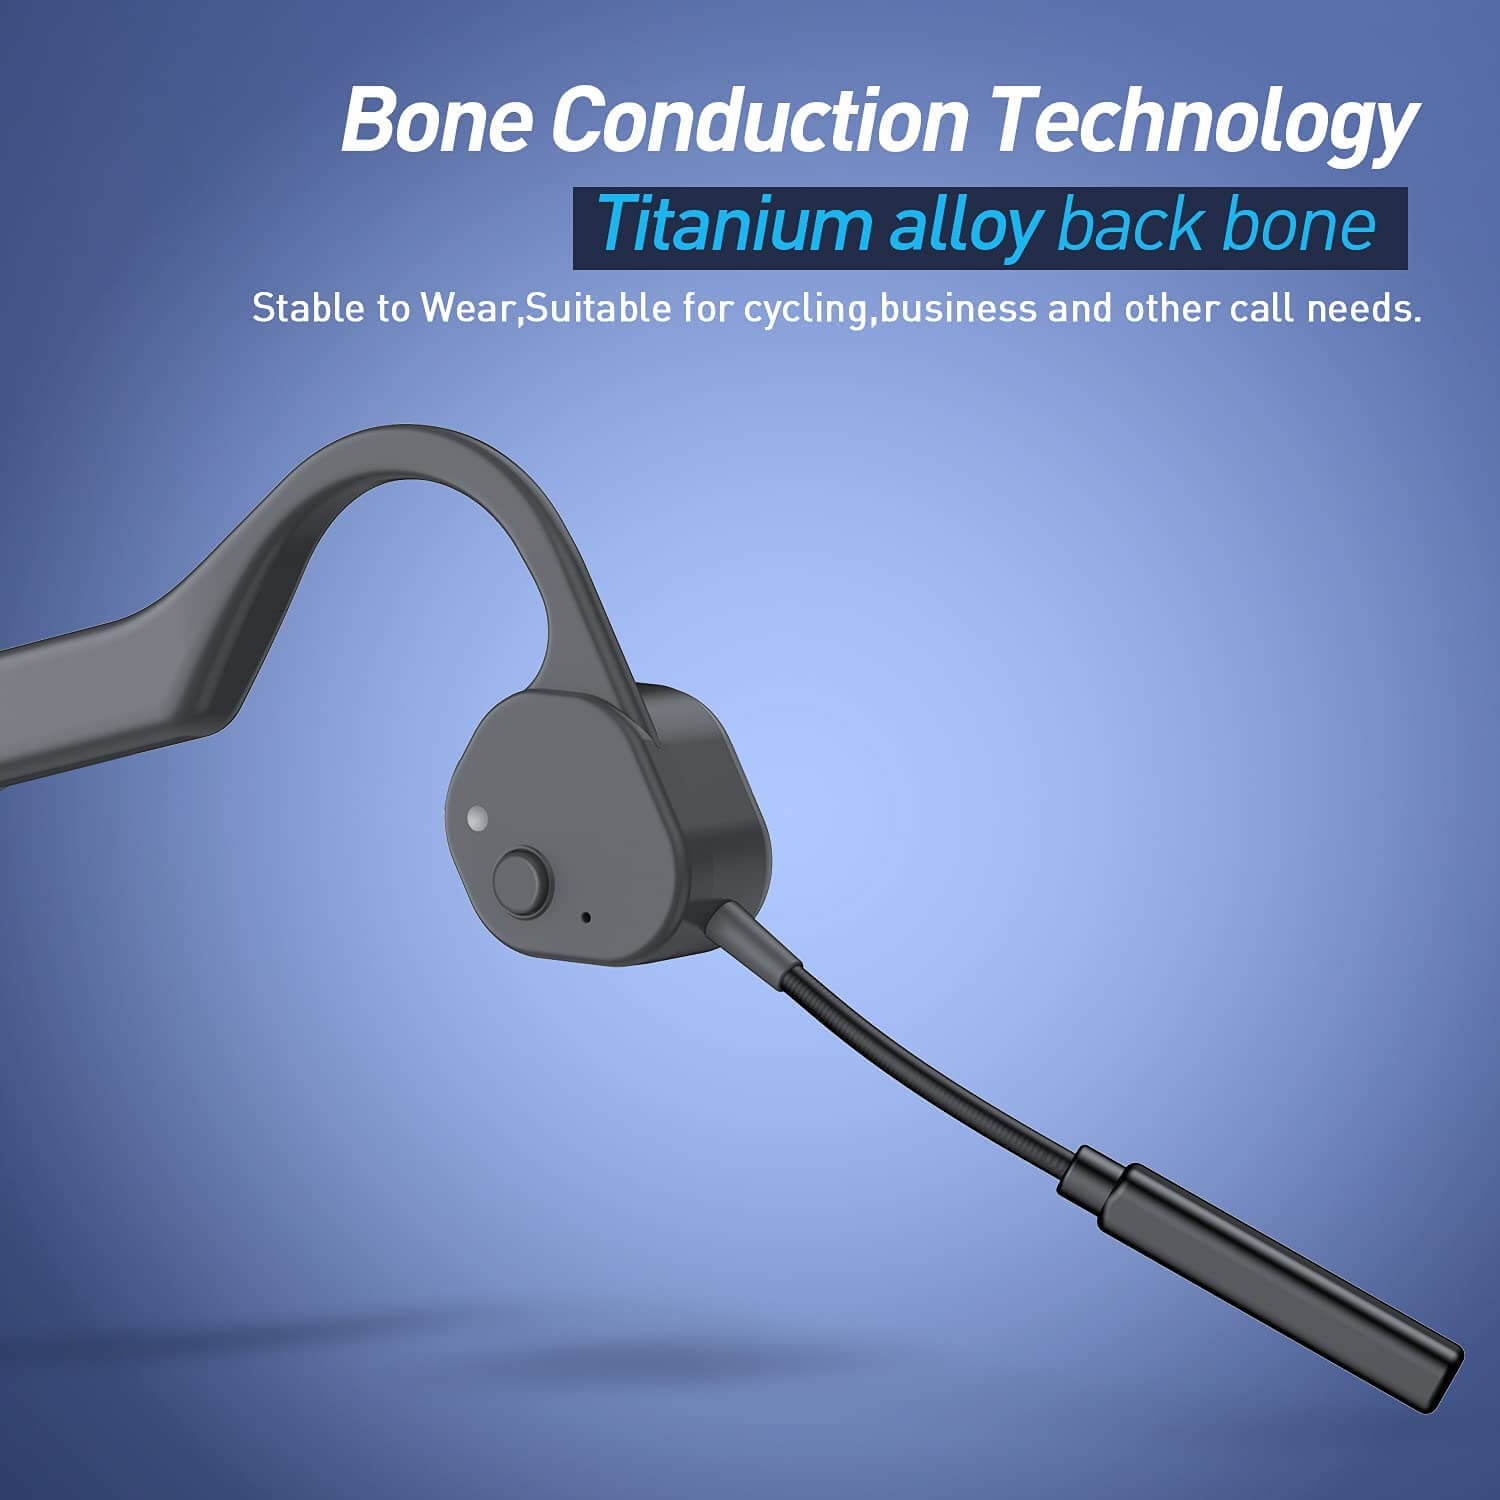 vidonn f3 pro bone conduction headphone with a boom mic showing titanium alloy back bone